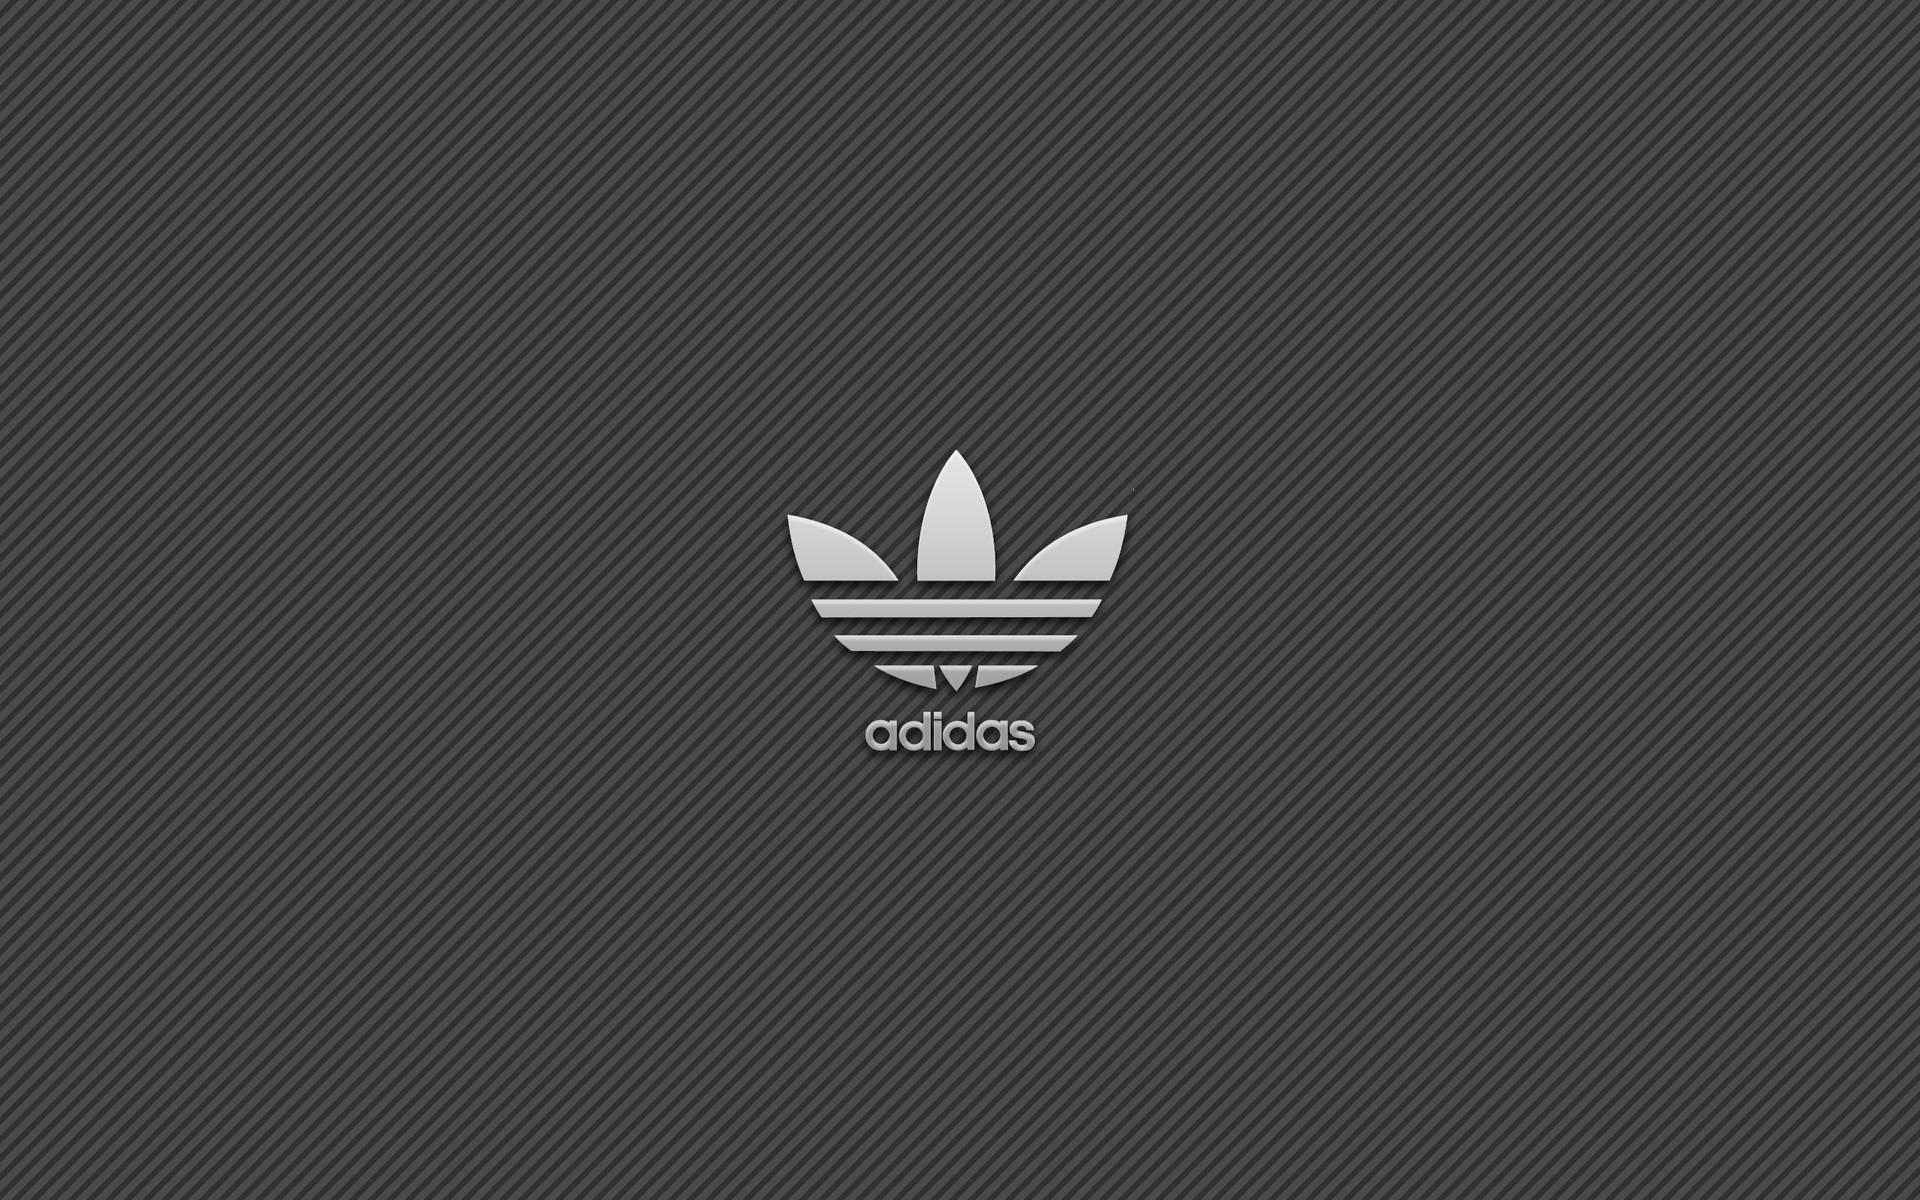 Cool 2d Adidas Logo Background